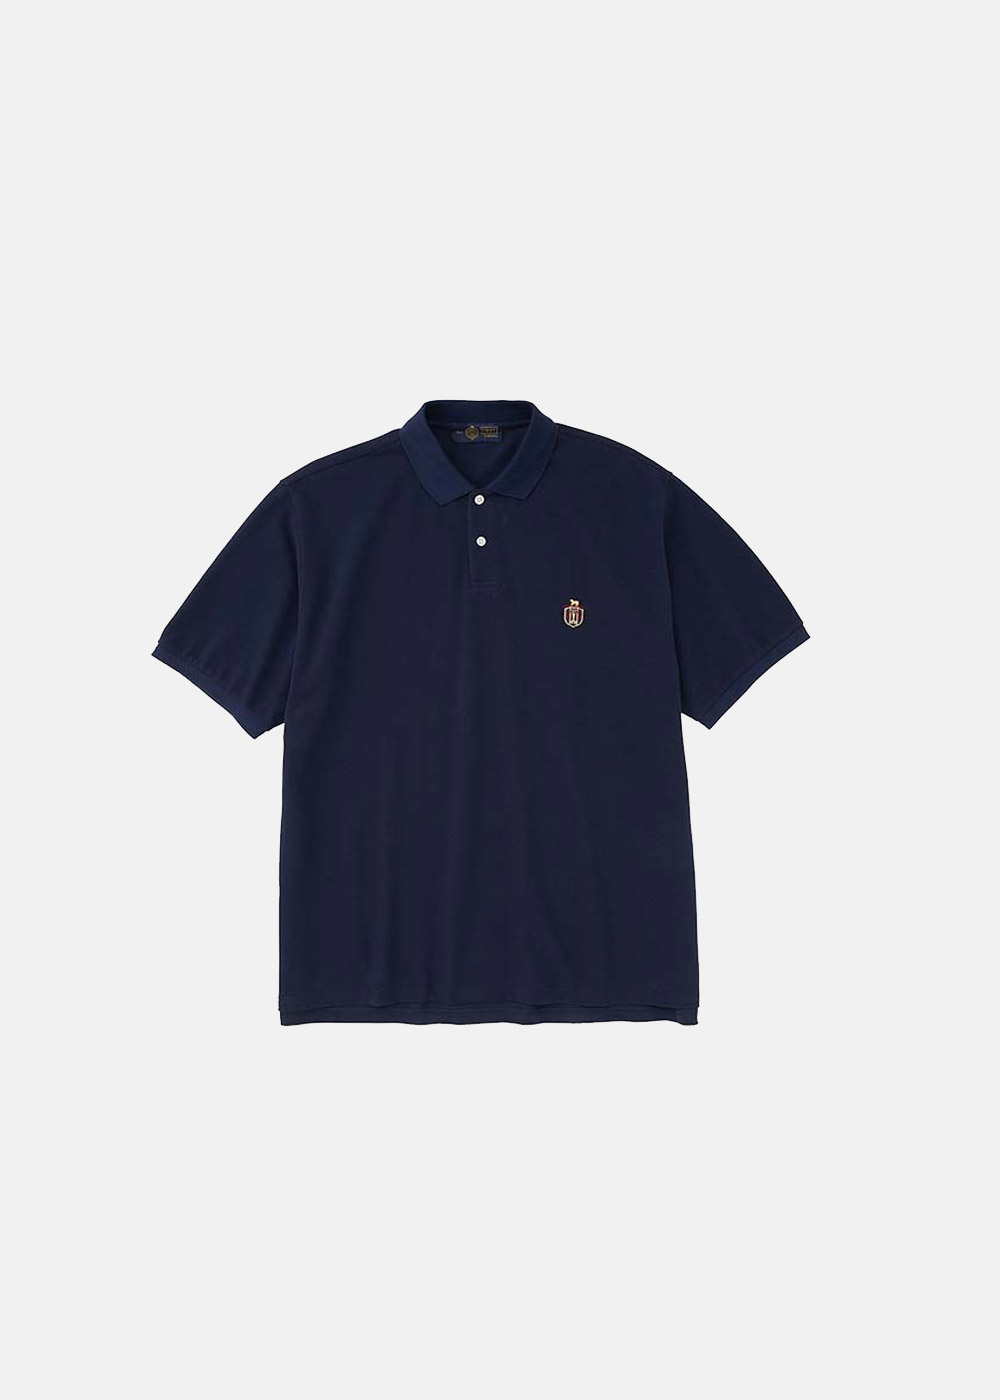 CRST Polo Shirts (Navy)